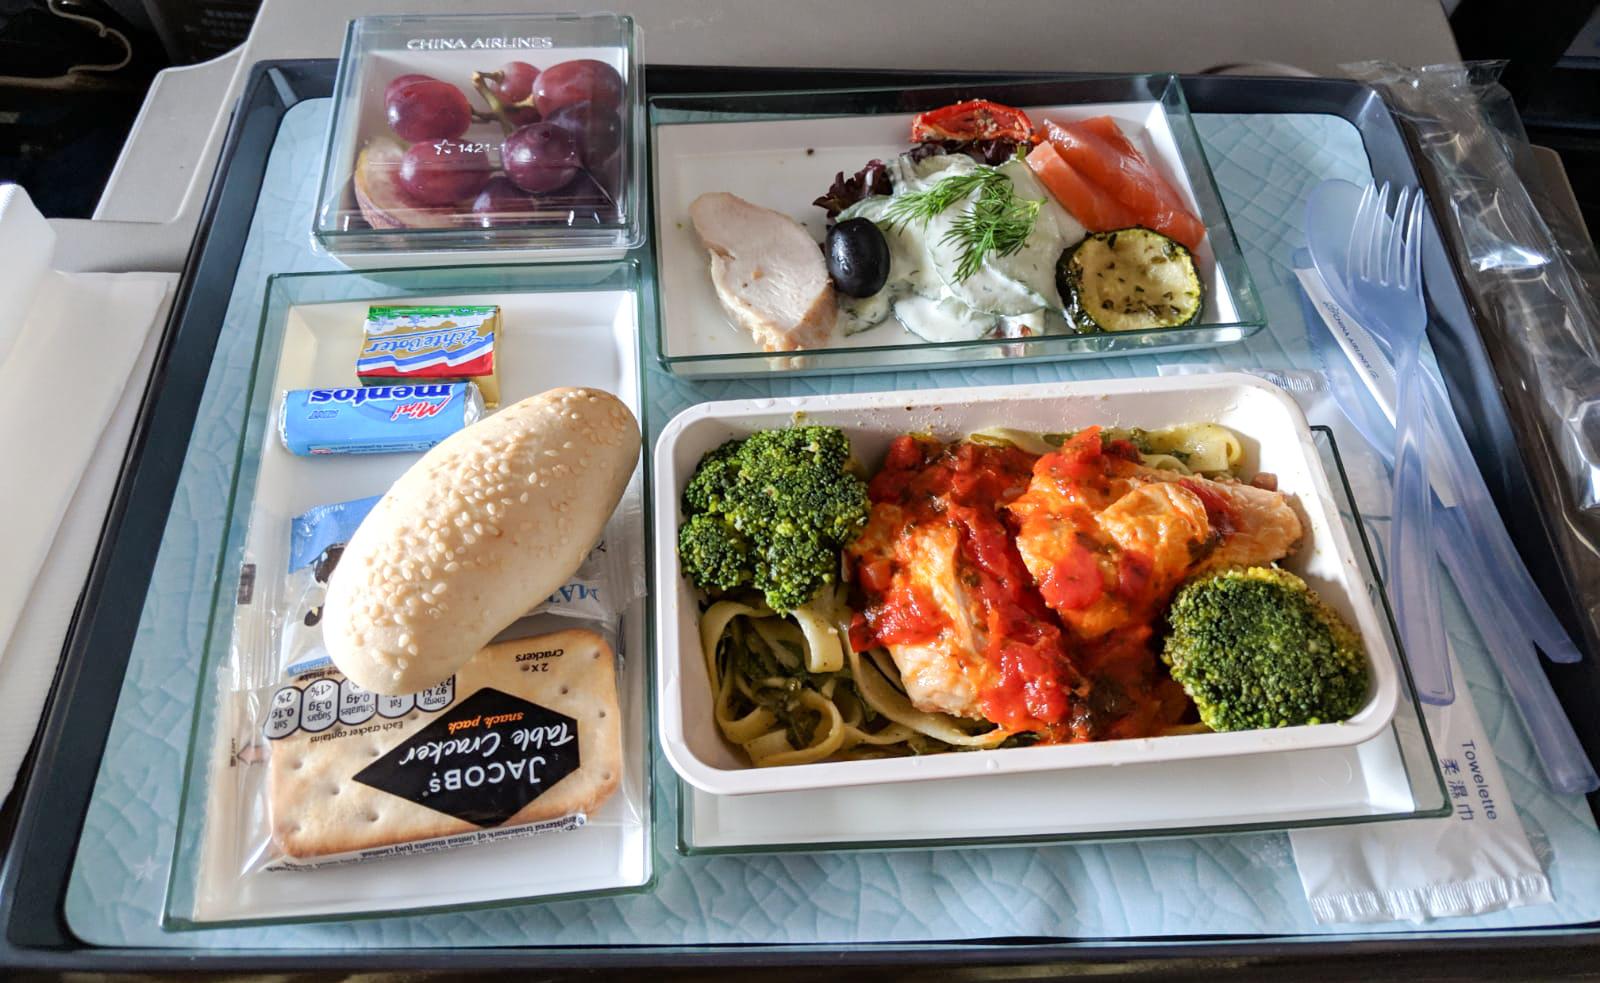 China Airlines Premium Economy meal